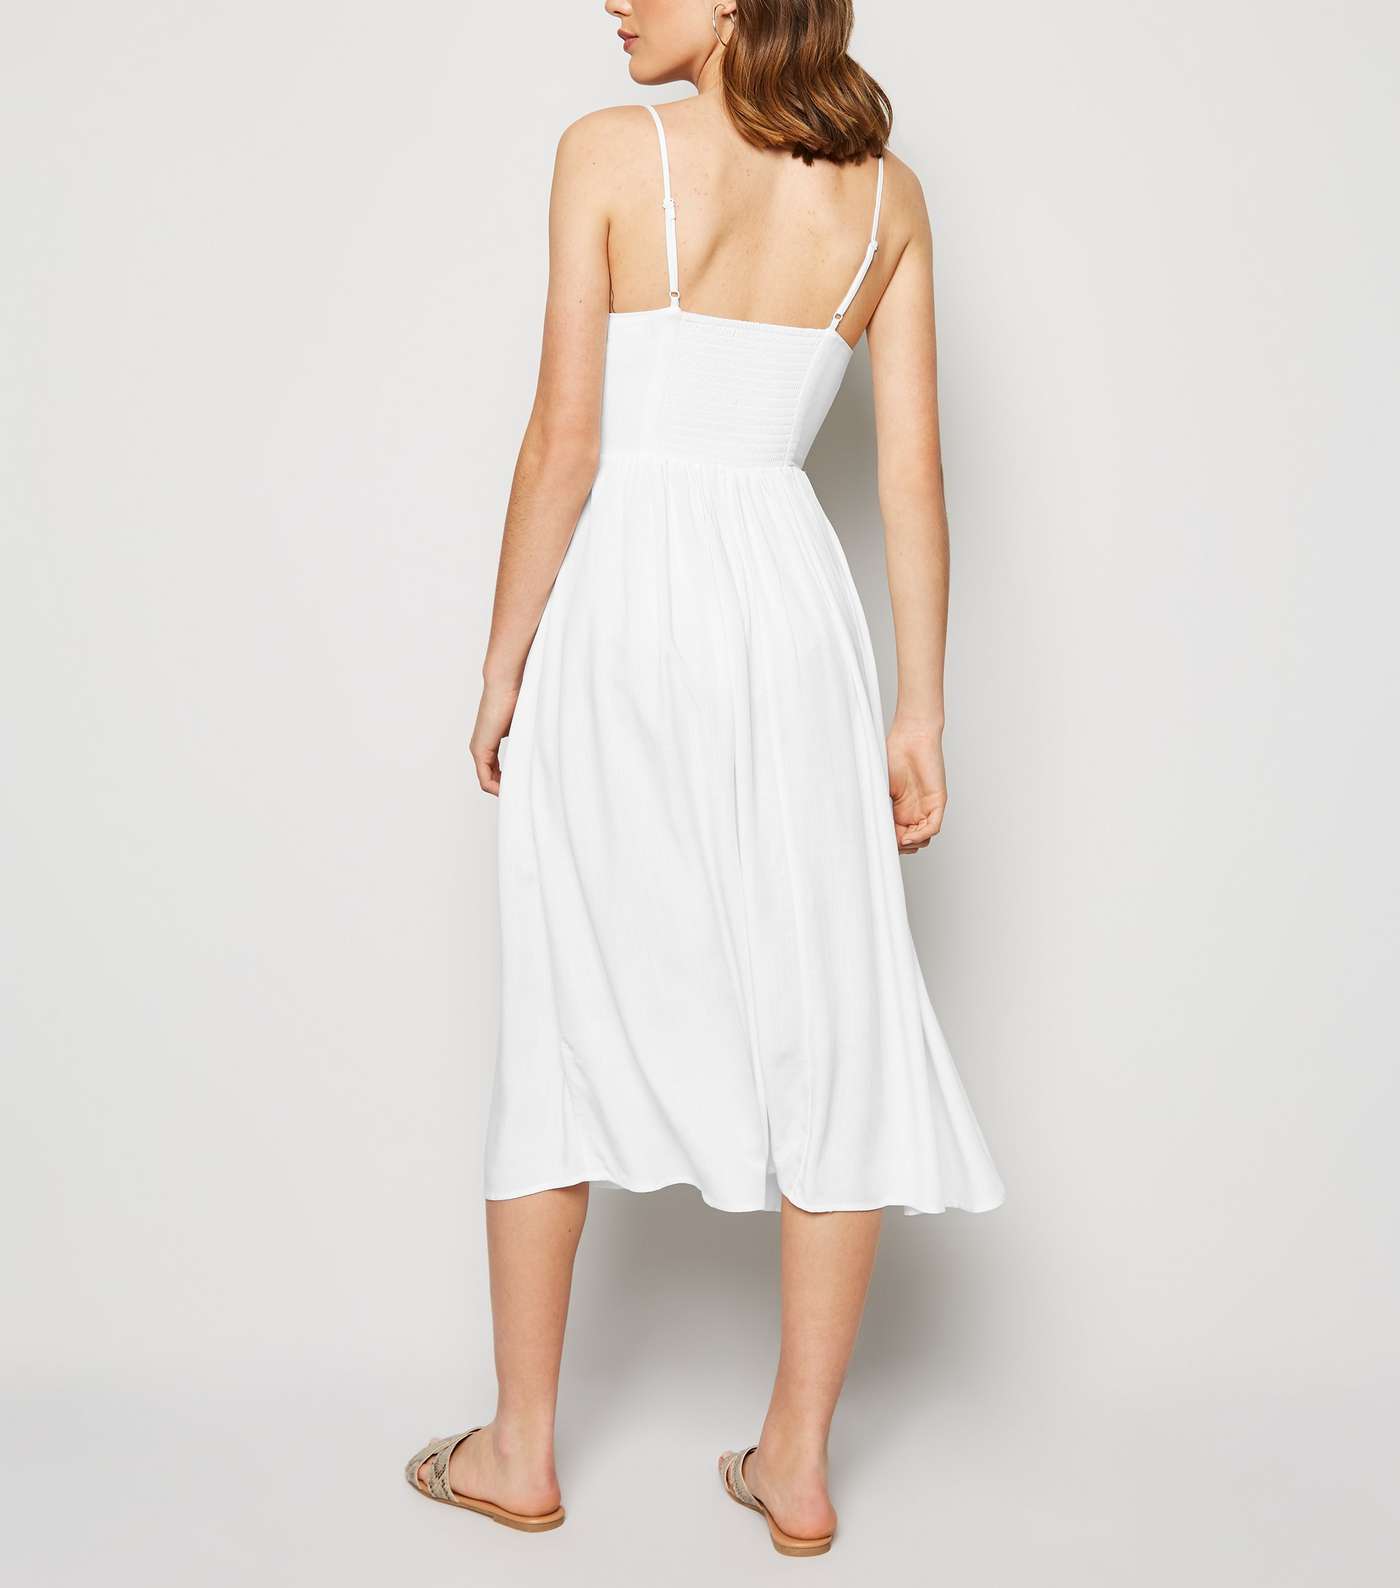 White Strappy Lace Up Midi Dress Image 3